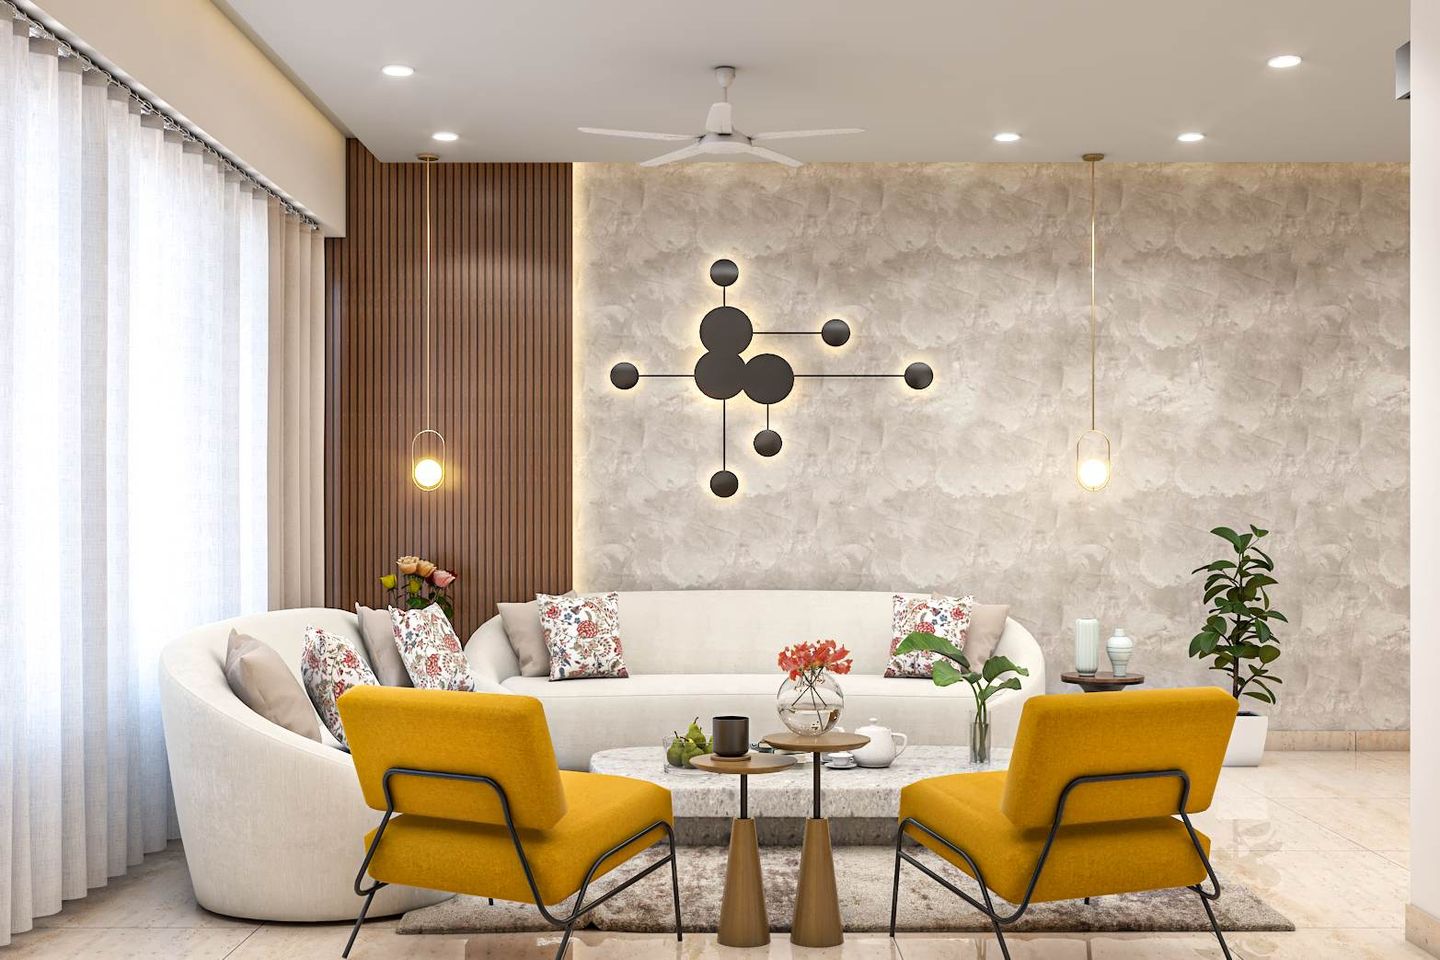 Living Room Design With LED Strip Lighting - Livspace